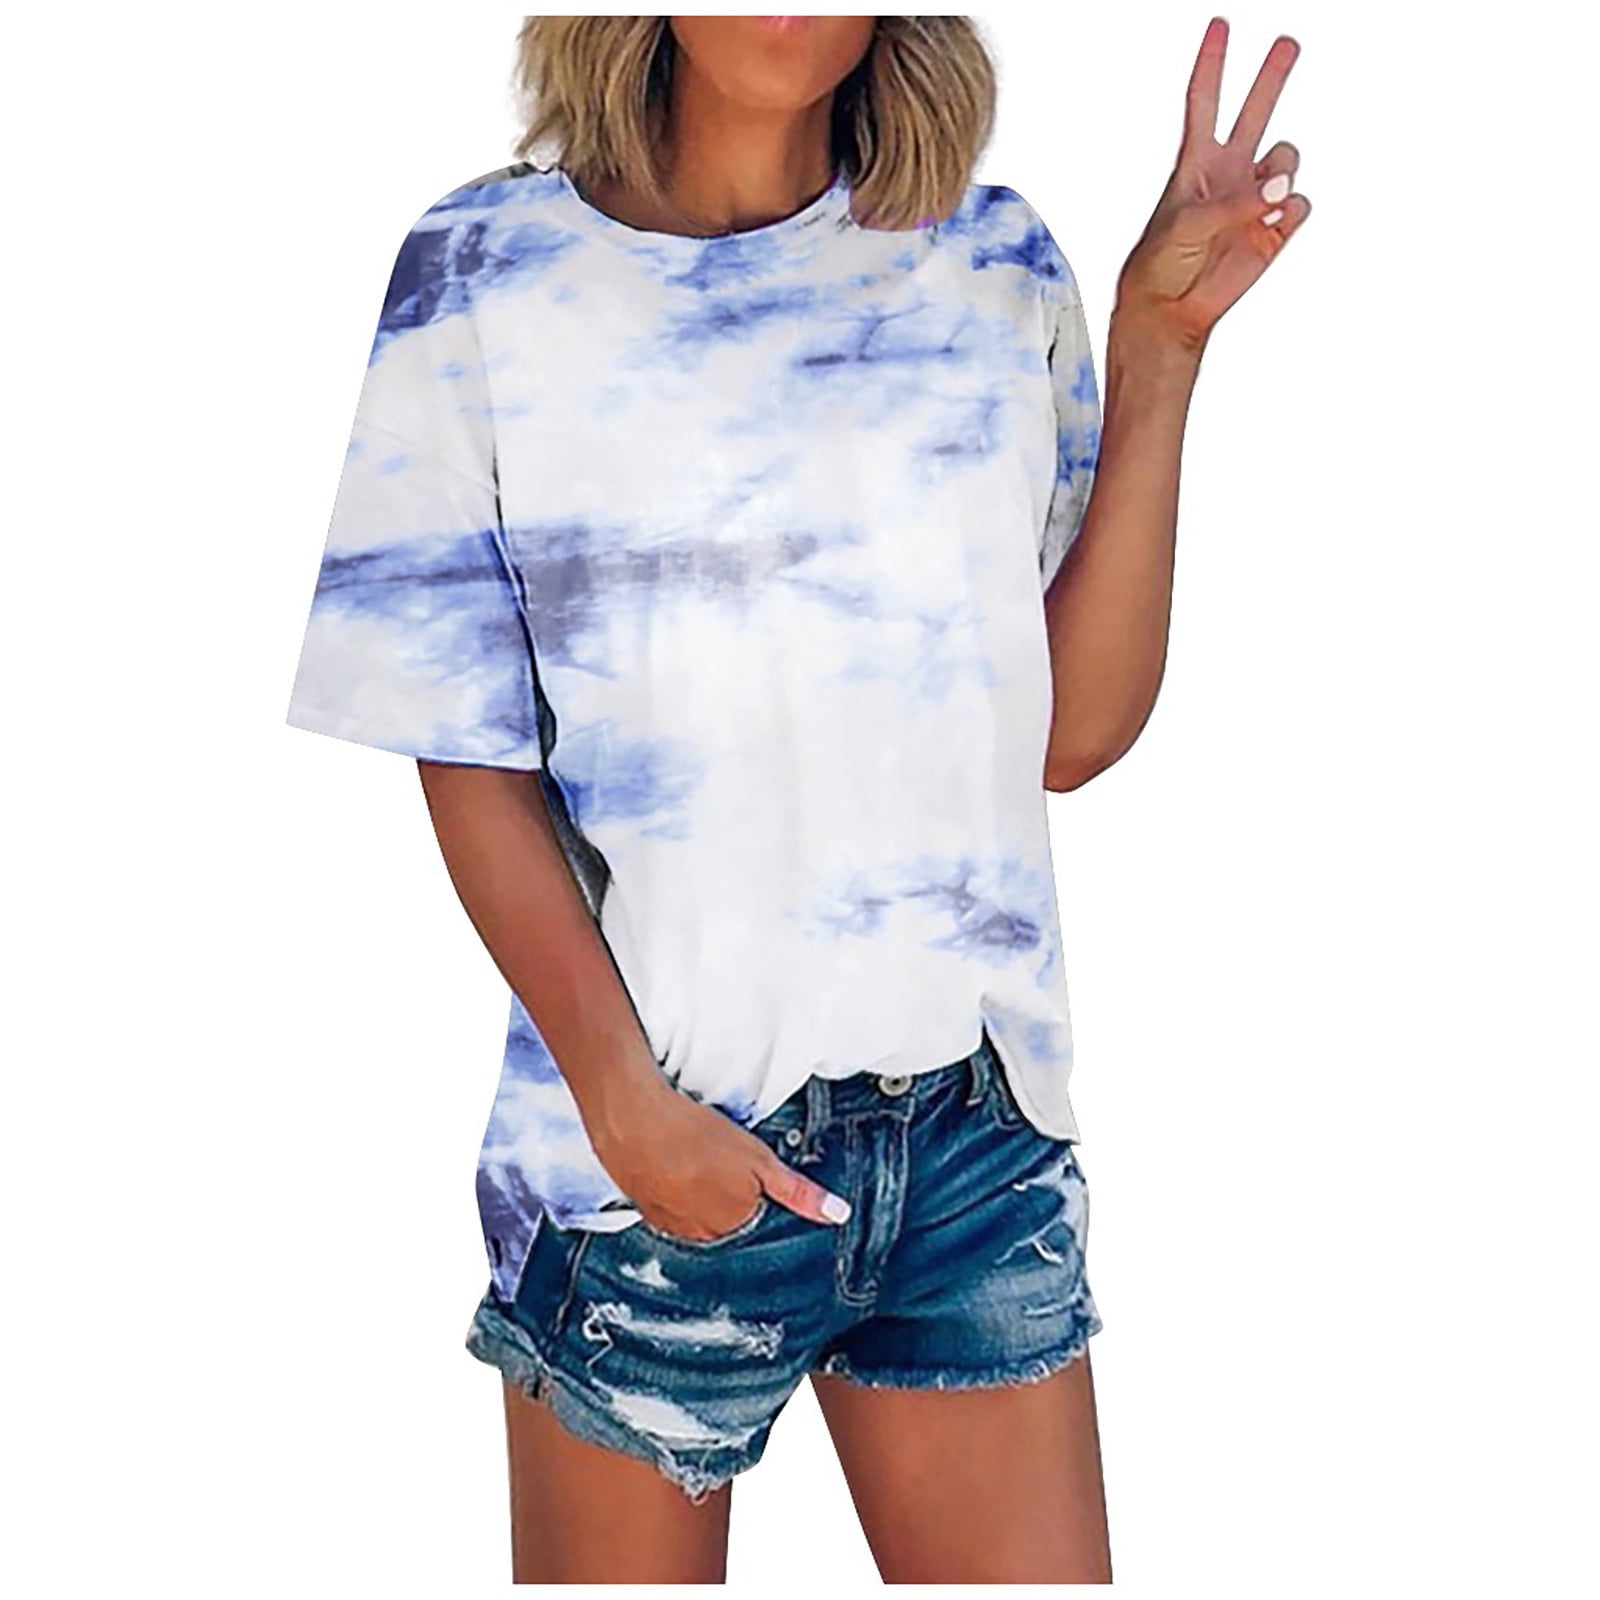 Wandatree Summer Plus Size T Shirts for Women Clearance Tie Dye Print ...